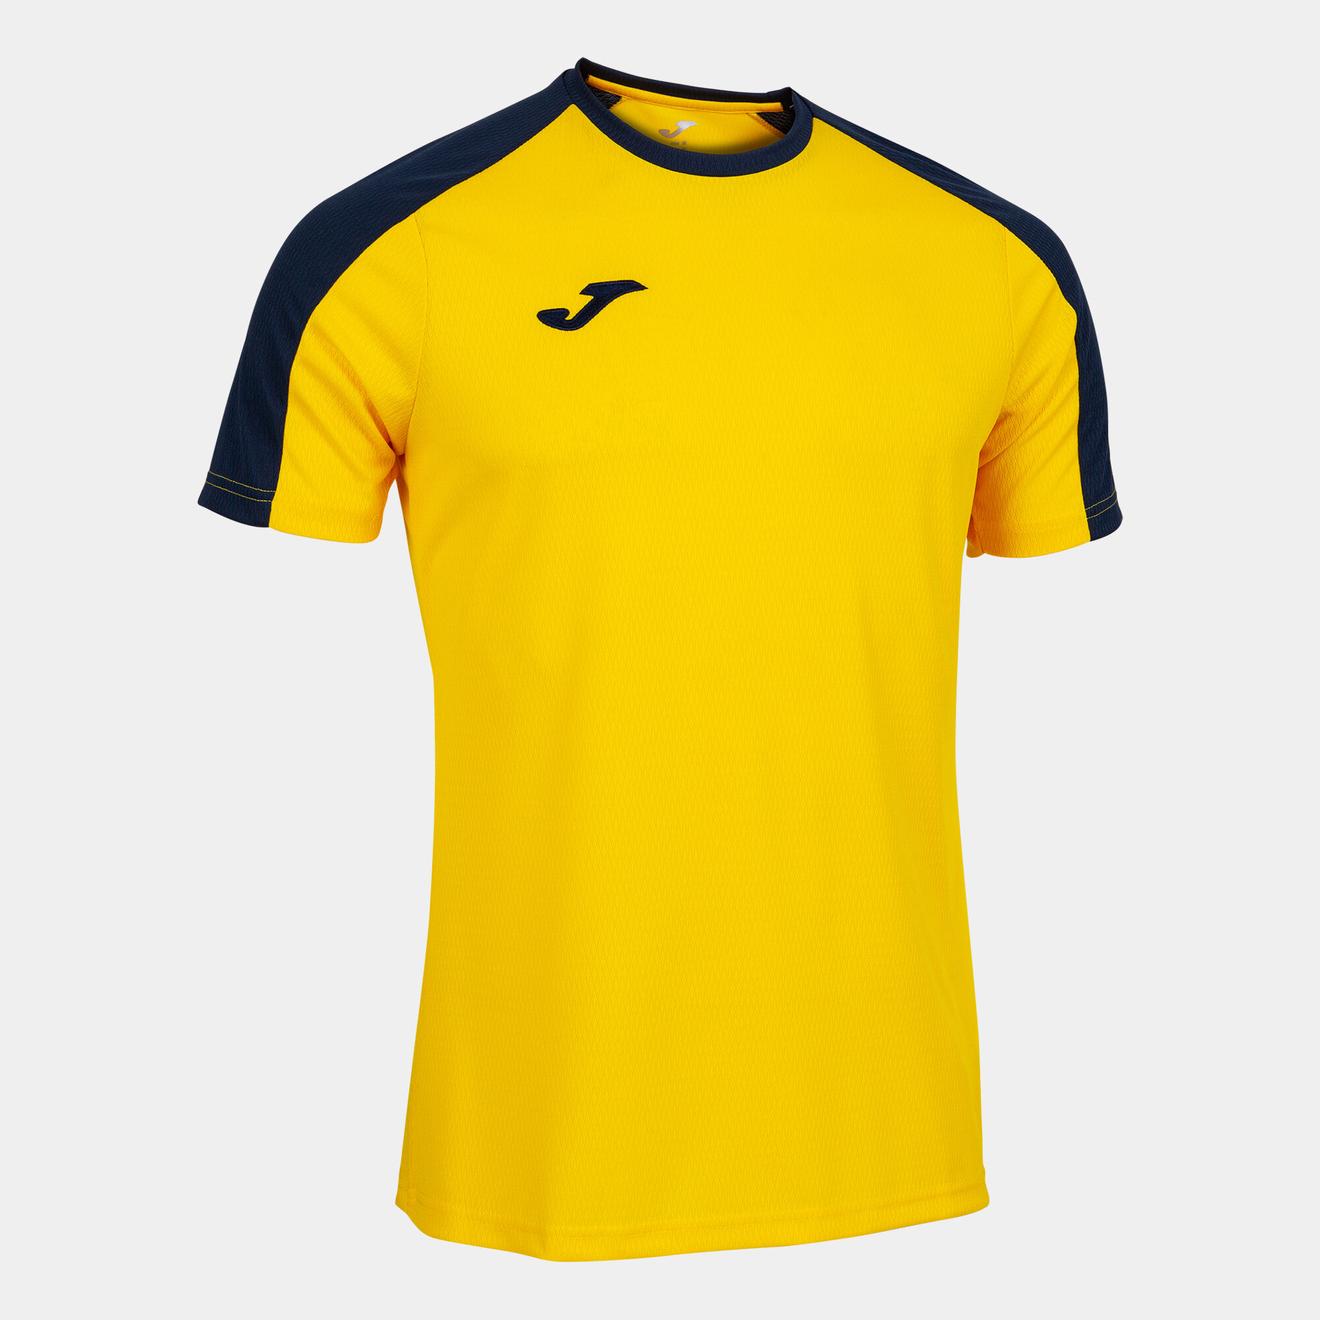 Oferta de Camiseta manga corta hombre Eco Championship amarillo marino por $17,56 en Joma